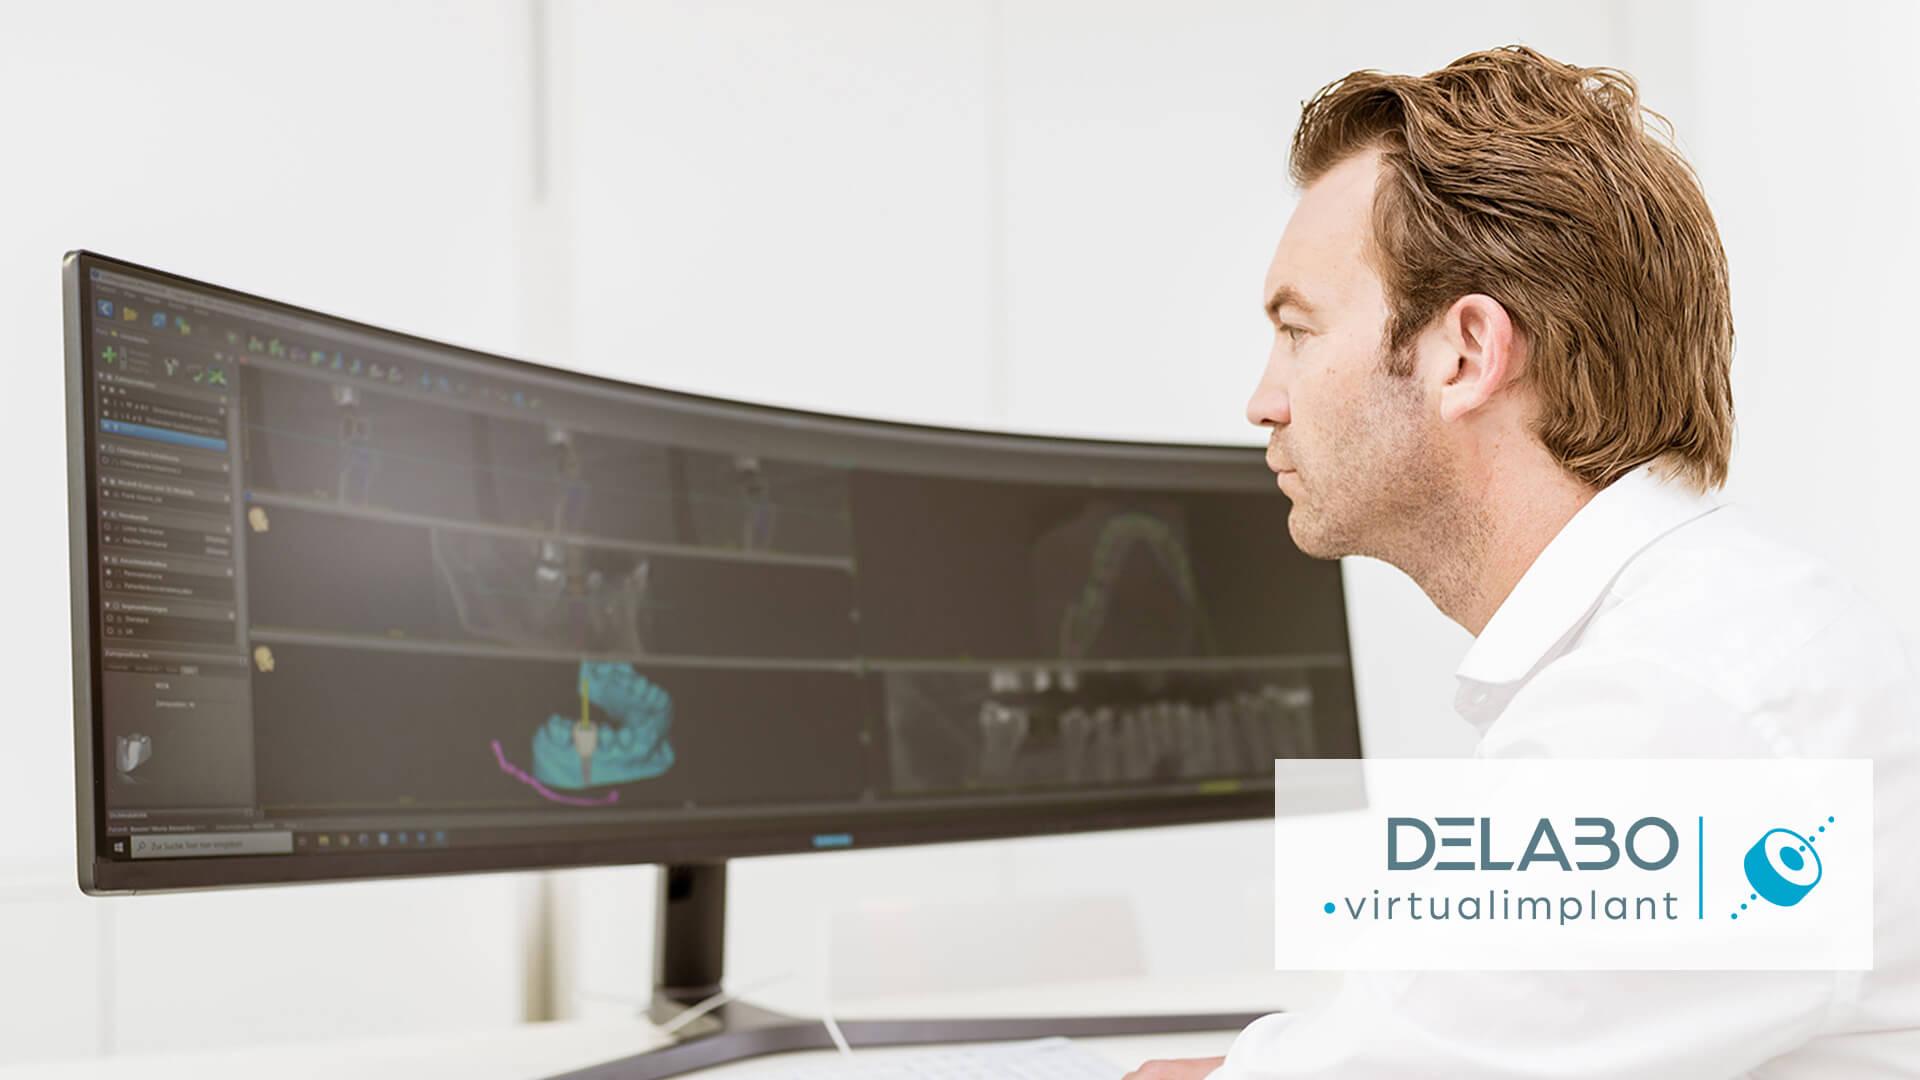 Product DELABO.virtualimplant – umfassender Service für perfekte Implantate - Hamm Dental Zahntechnik image